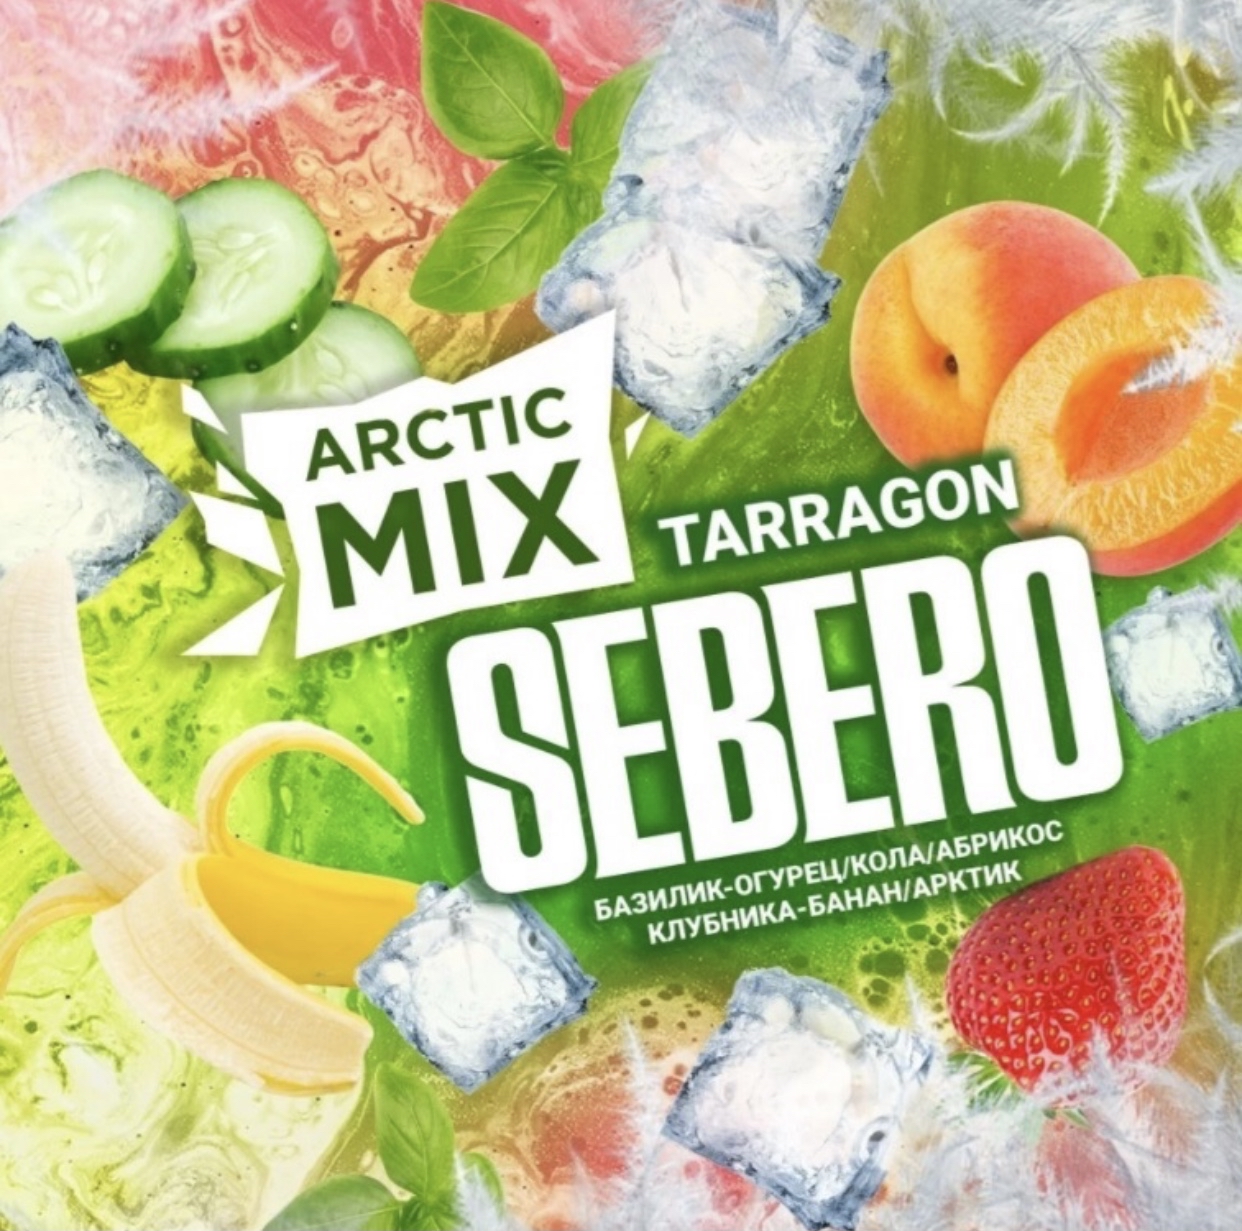 Табак - Sebero - Arctic Mix - Tarragon - 60g